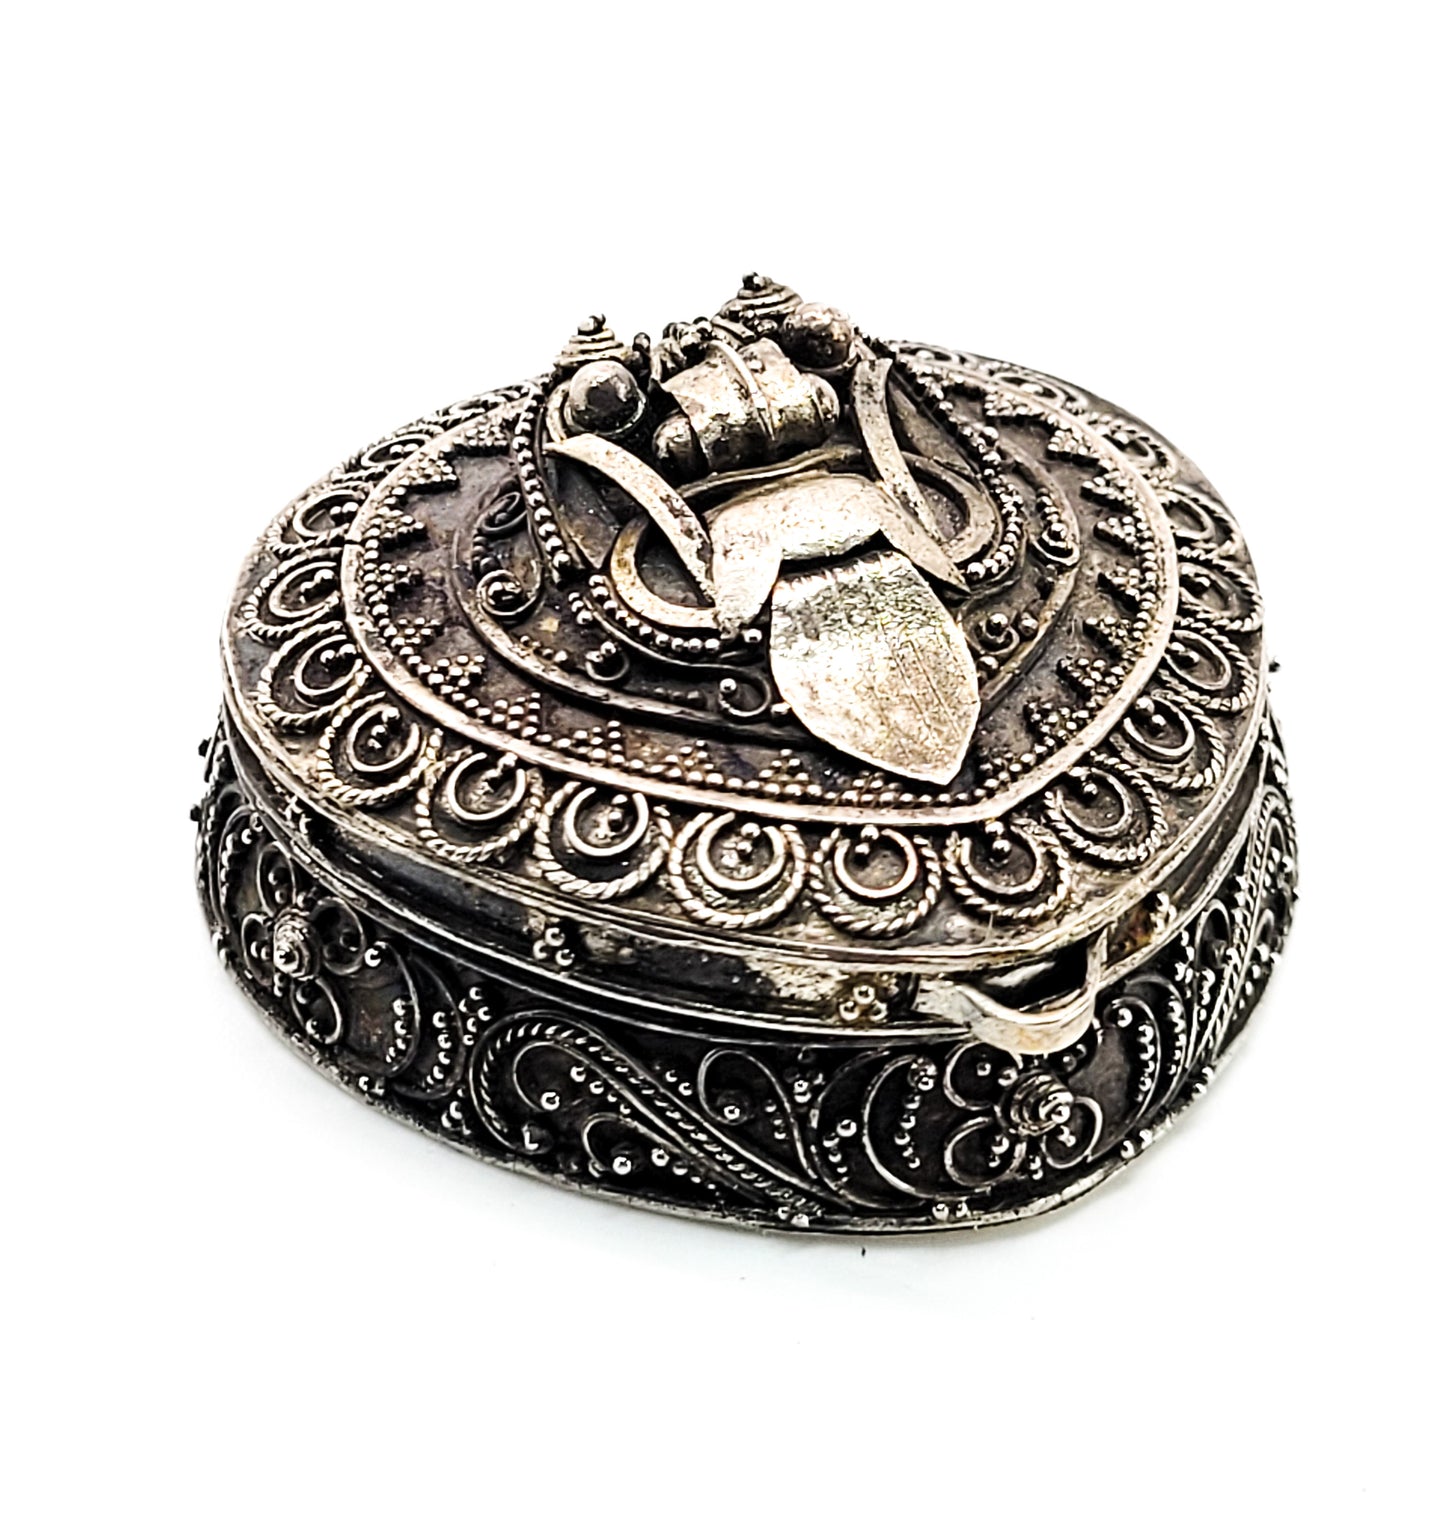 Rangda Balinese demon Queen Large mask sterling silver vintage trinket box jewelry